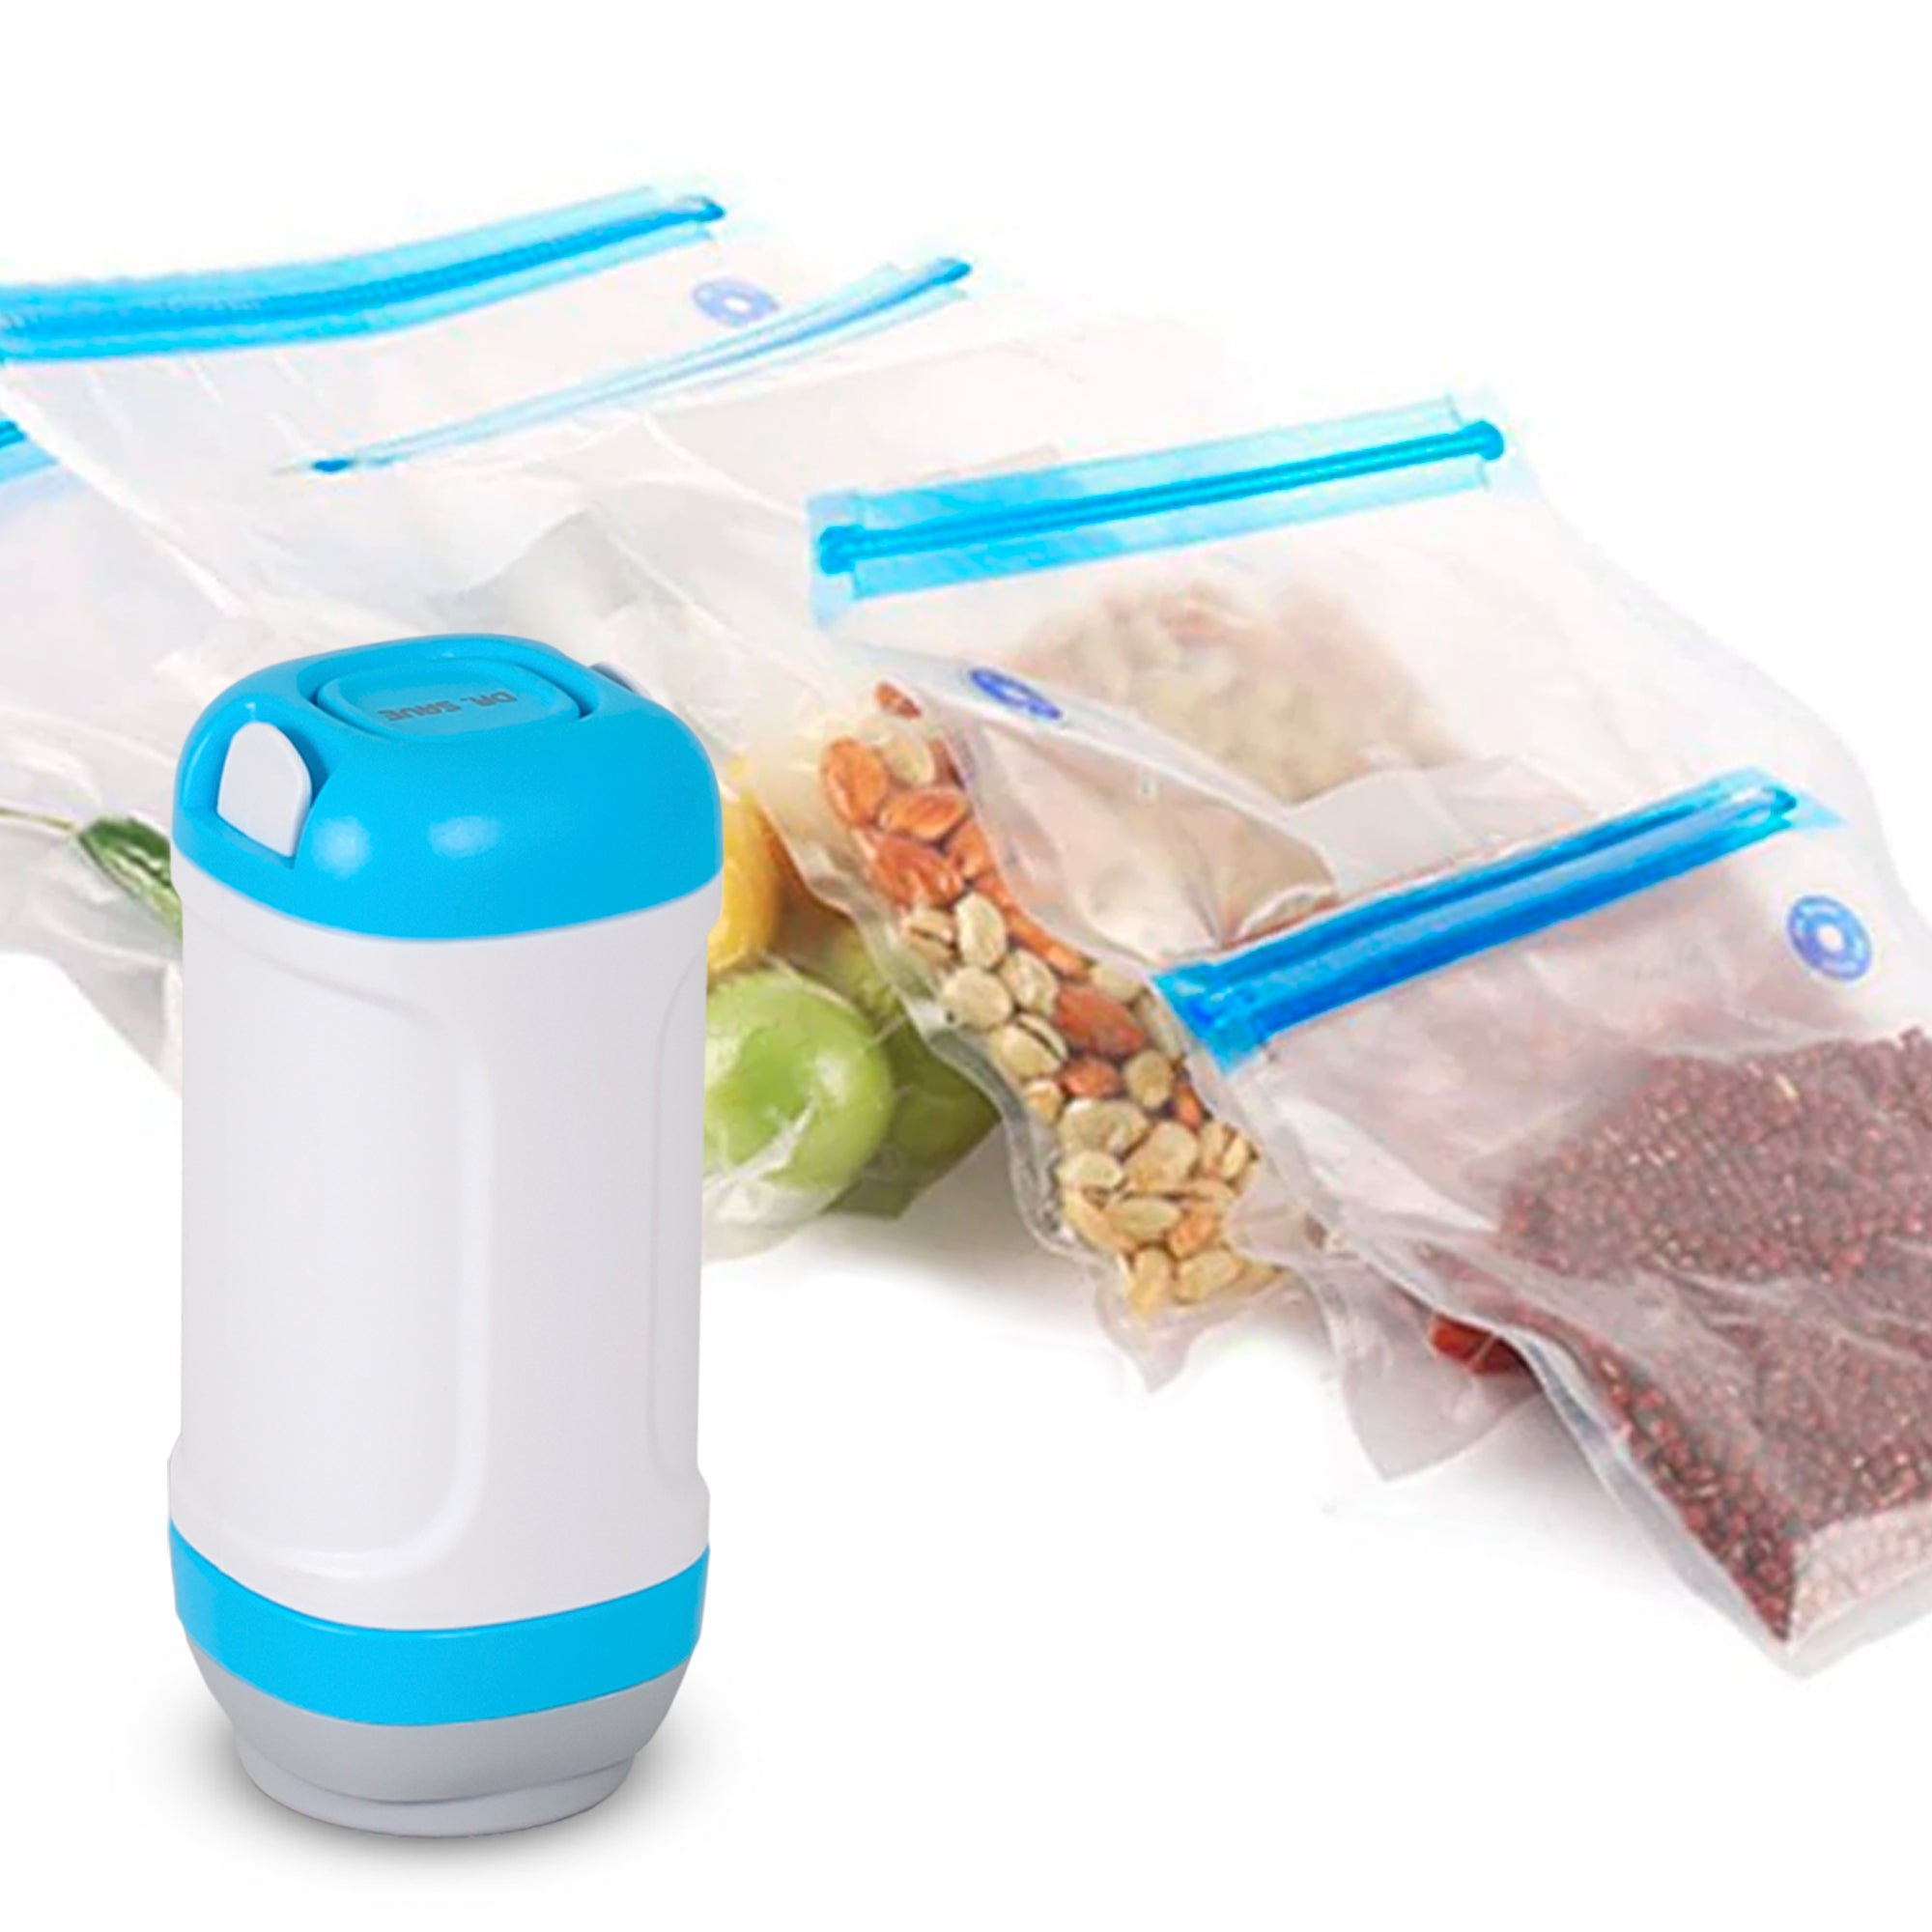 Electric Vaccum Pump Set Reusable Vacuum Seal Bags Sealer Food Storage  Container